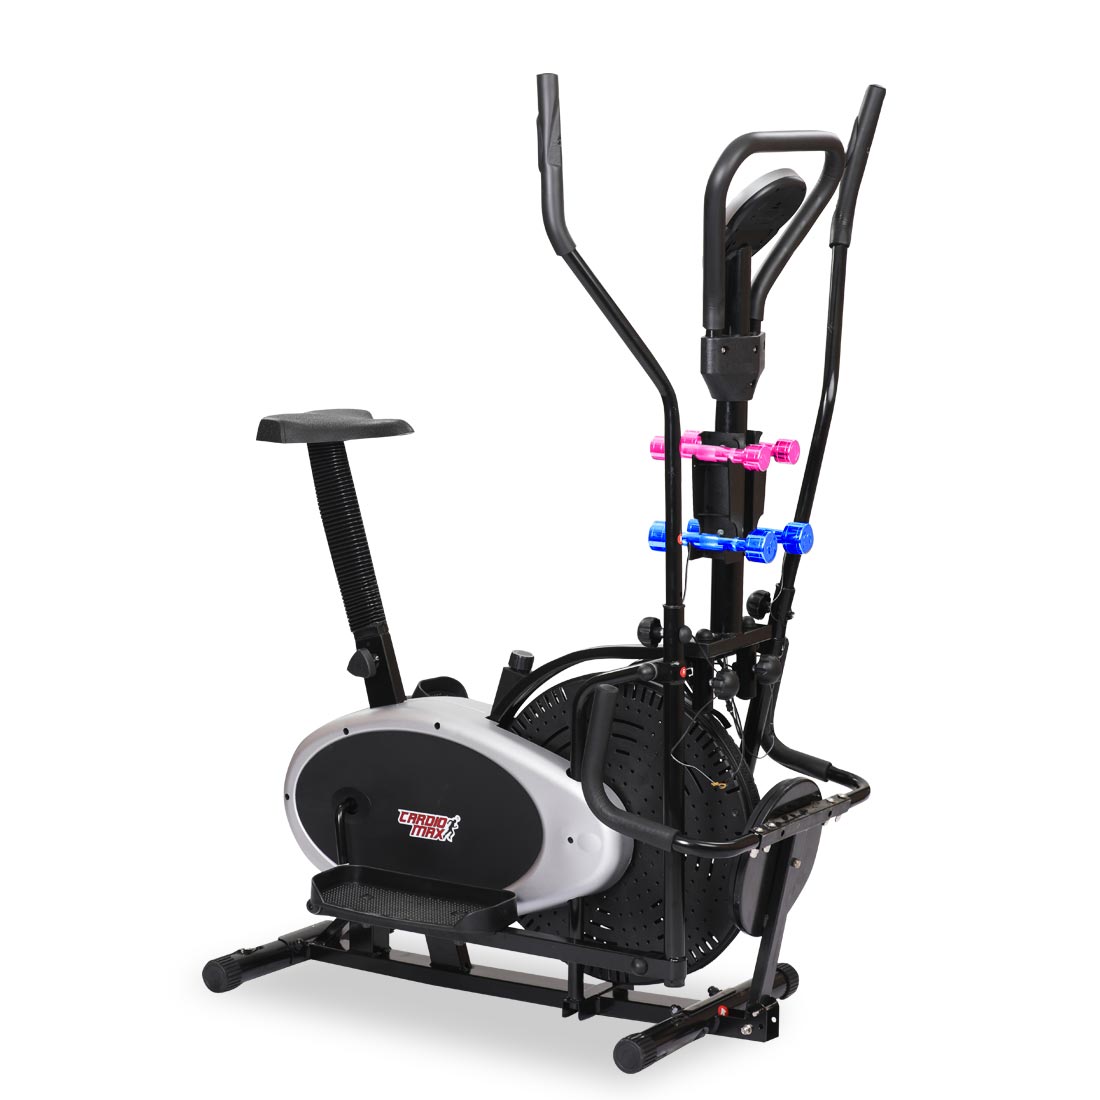 orbitrac exercise cycle elliptical cross trainer jsb hf150